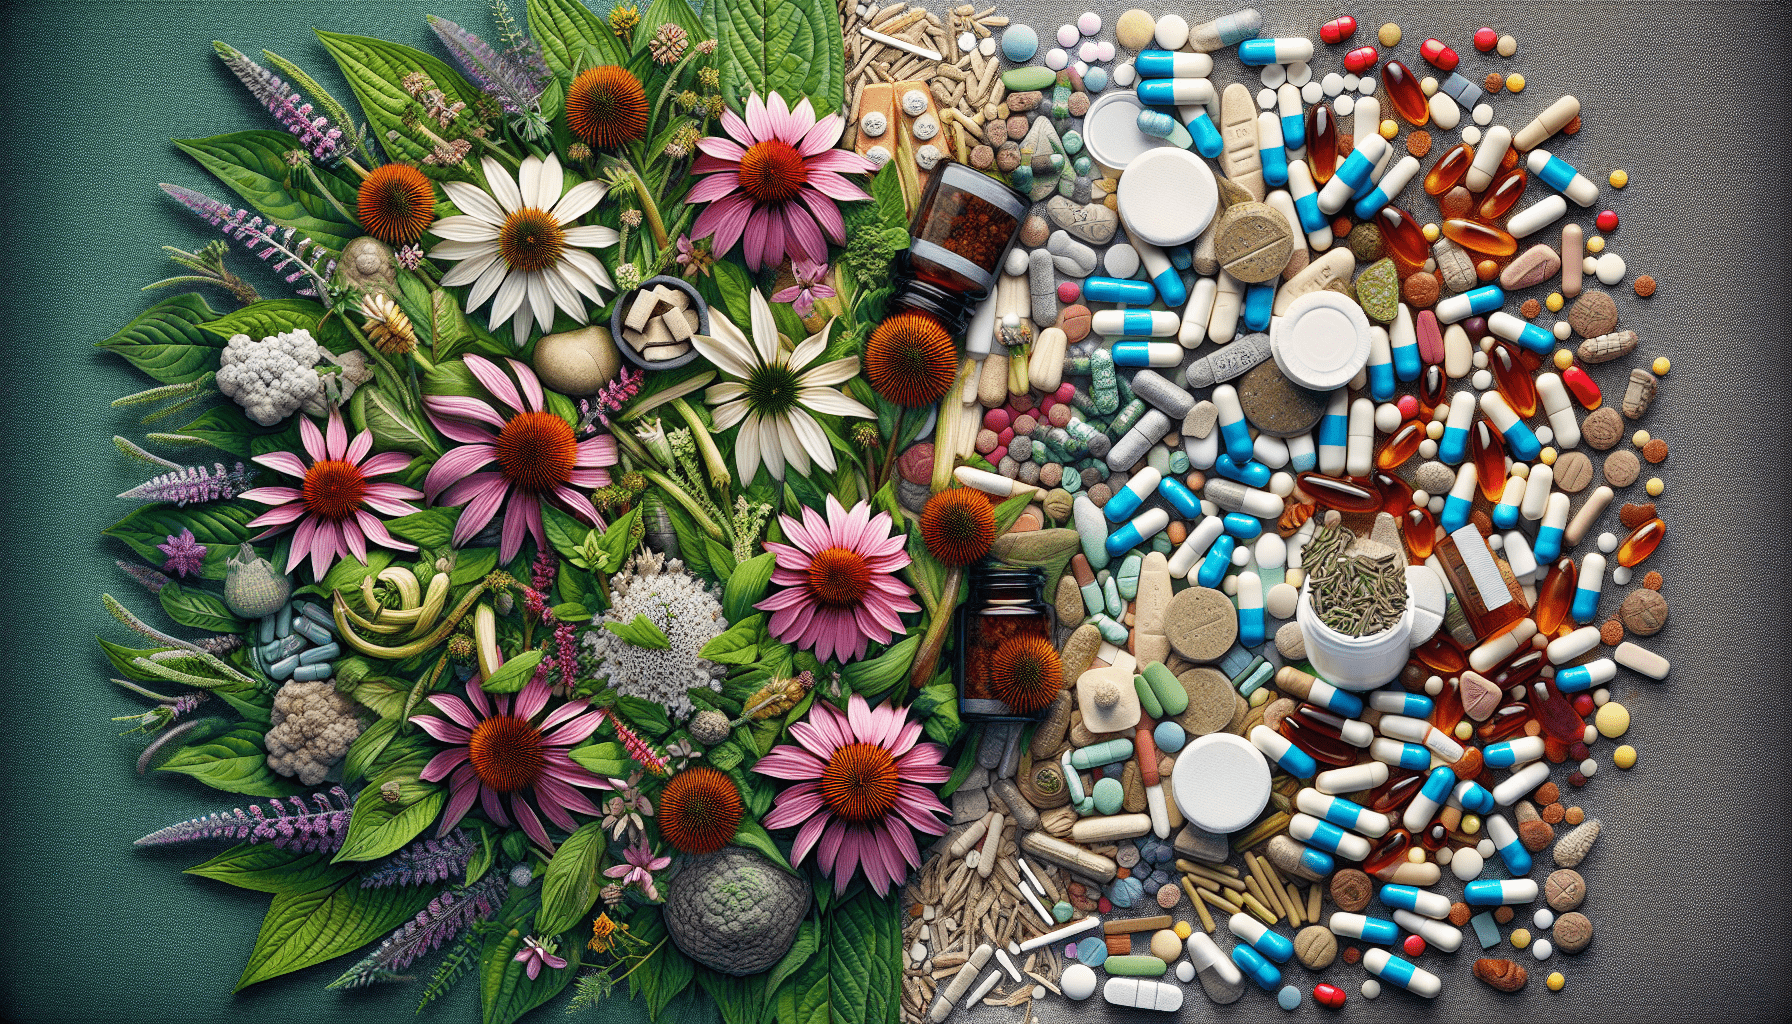 Survival Medicine: Natural Remedies Vs. Conventional Medications